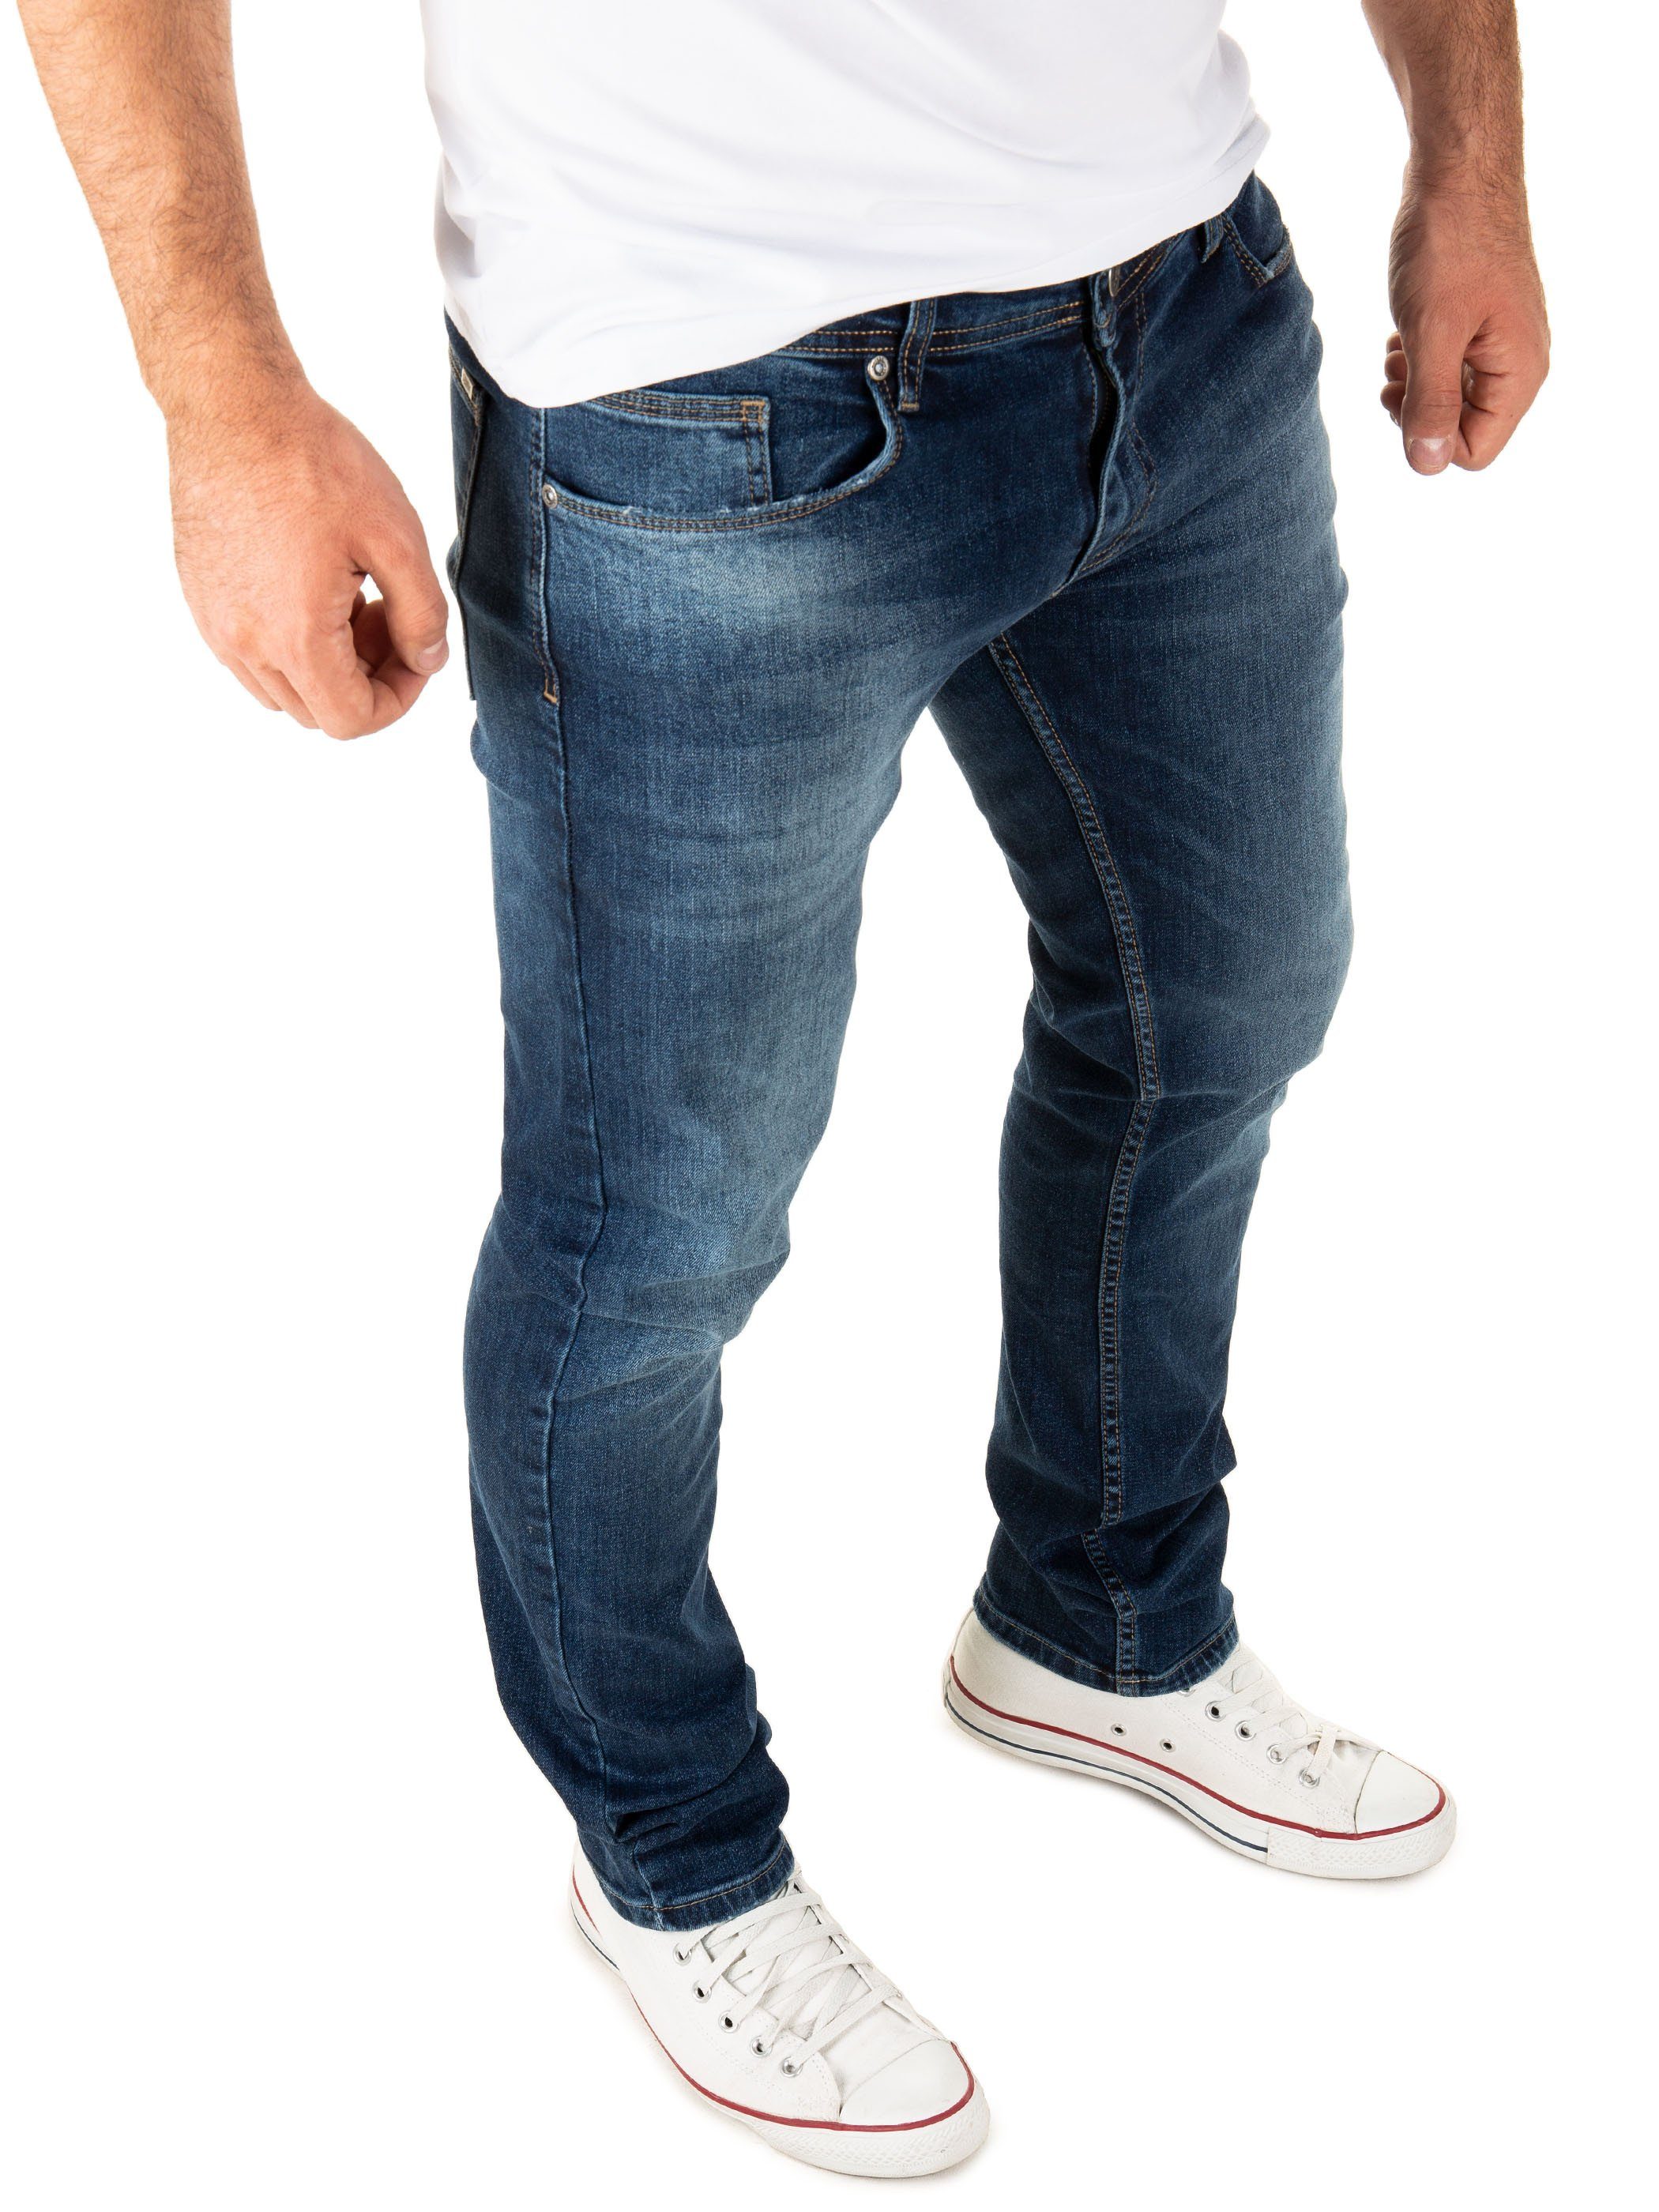 WOTEGA Slim-fit-Jeans Stretch Jeanshose Justin Herren Jeans mit Stretchanteil Blau (Insignia Blue 194028)